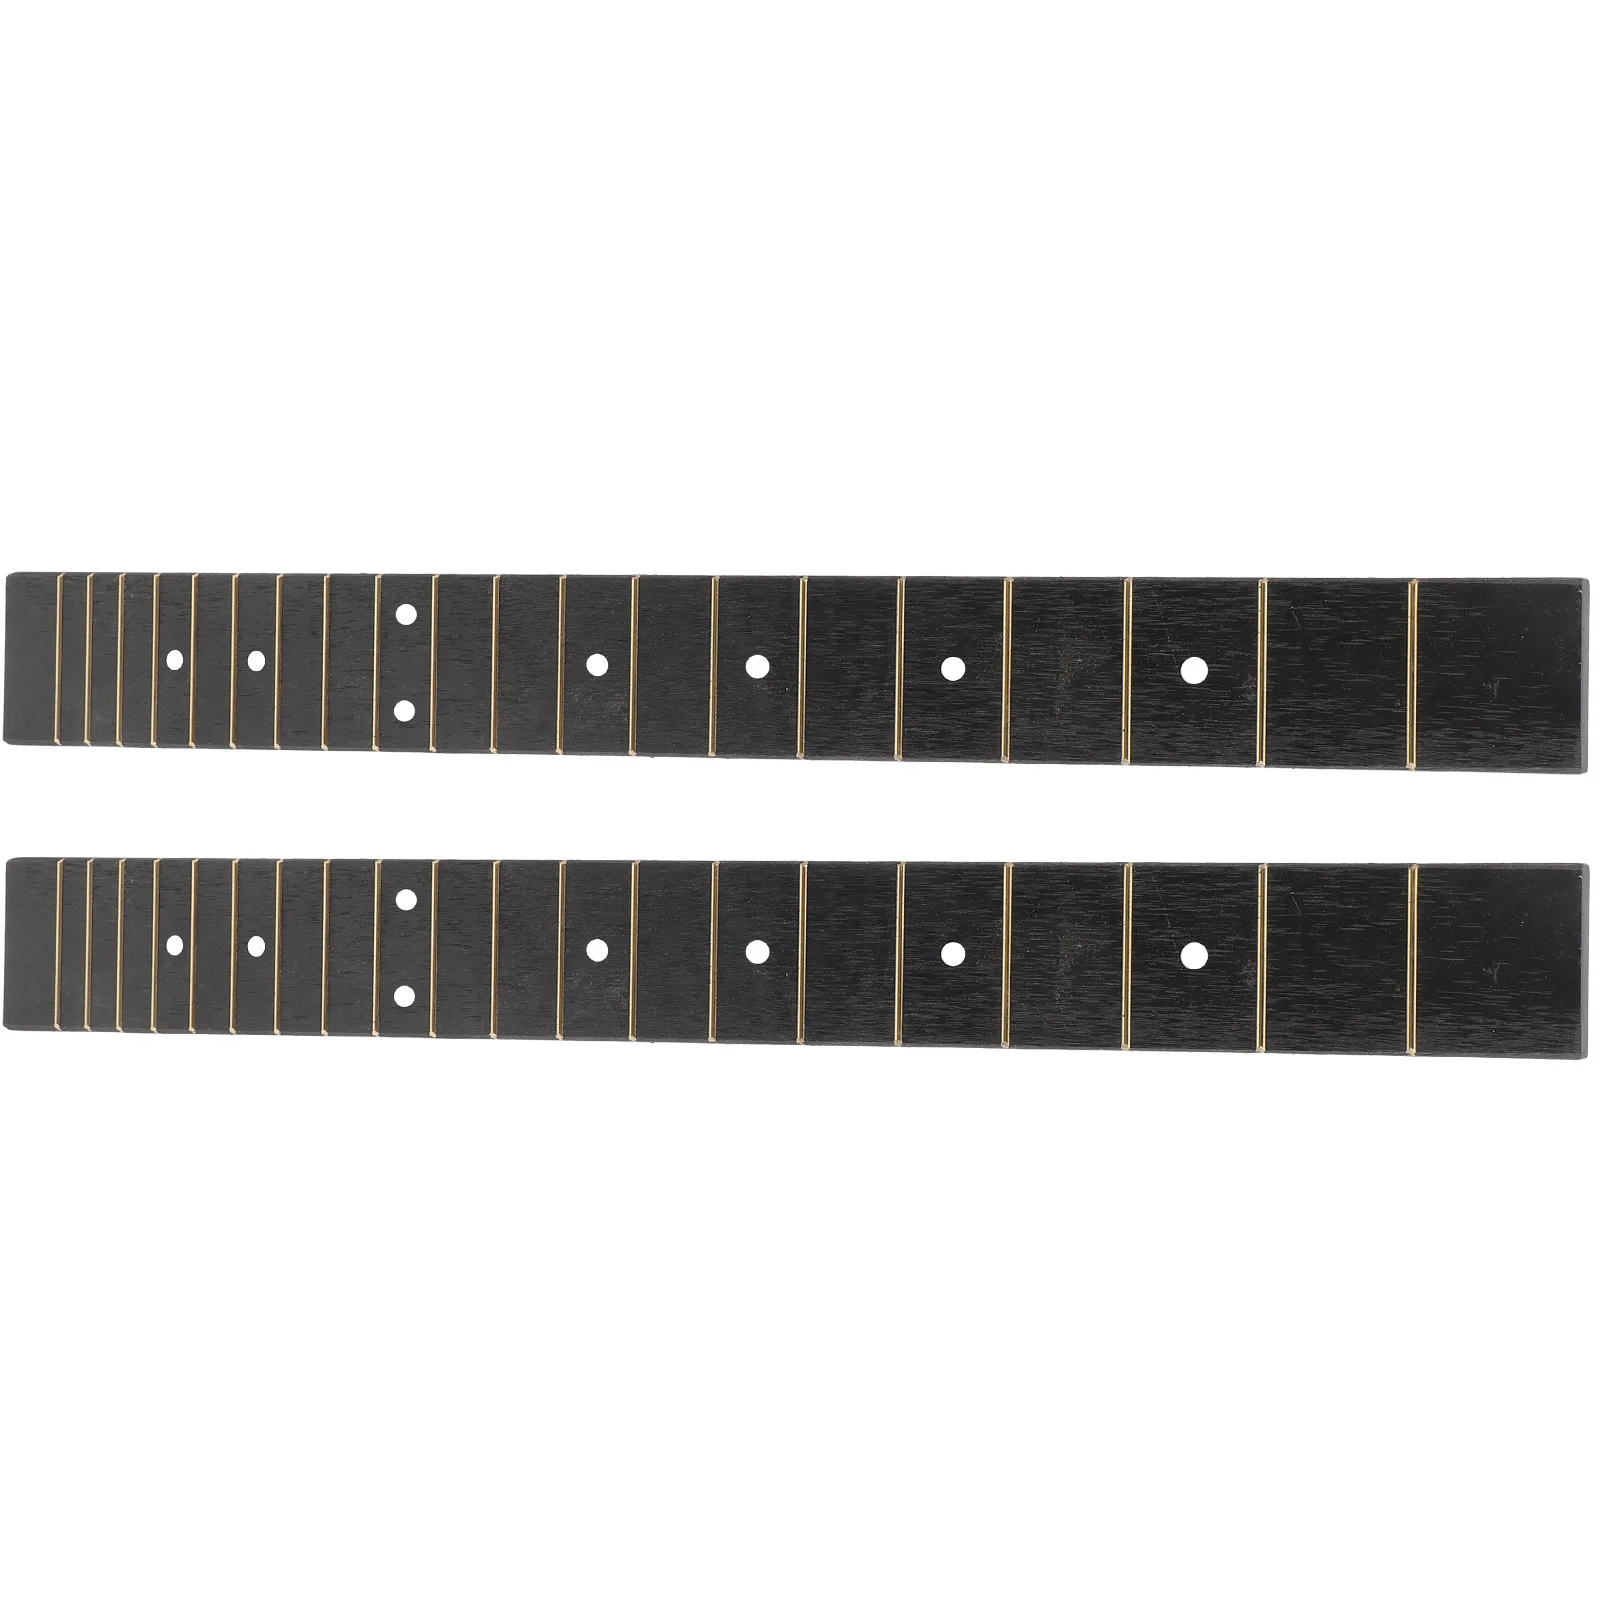 

2pcs Practical Guitar Fingerboard Durable Guitar Ukulele Fretboard Replacements Guitar Accessory